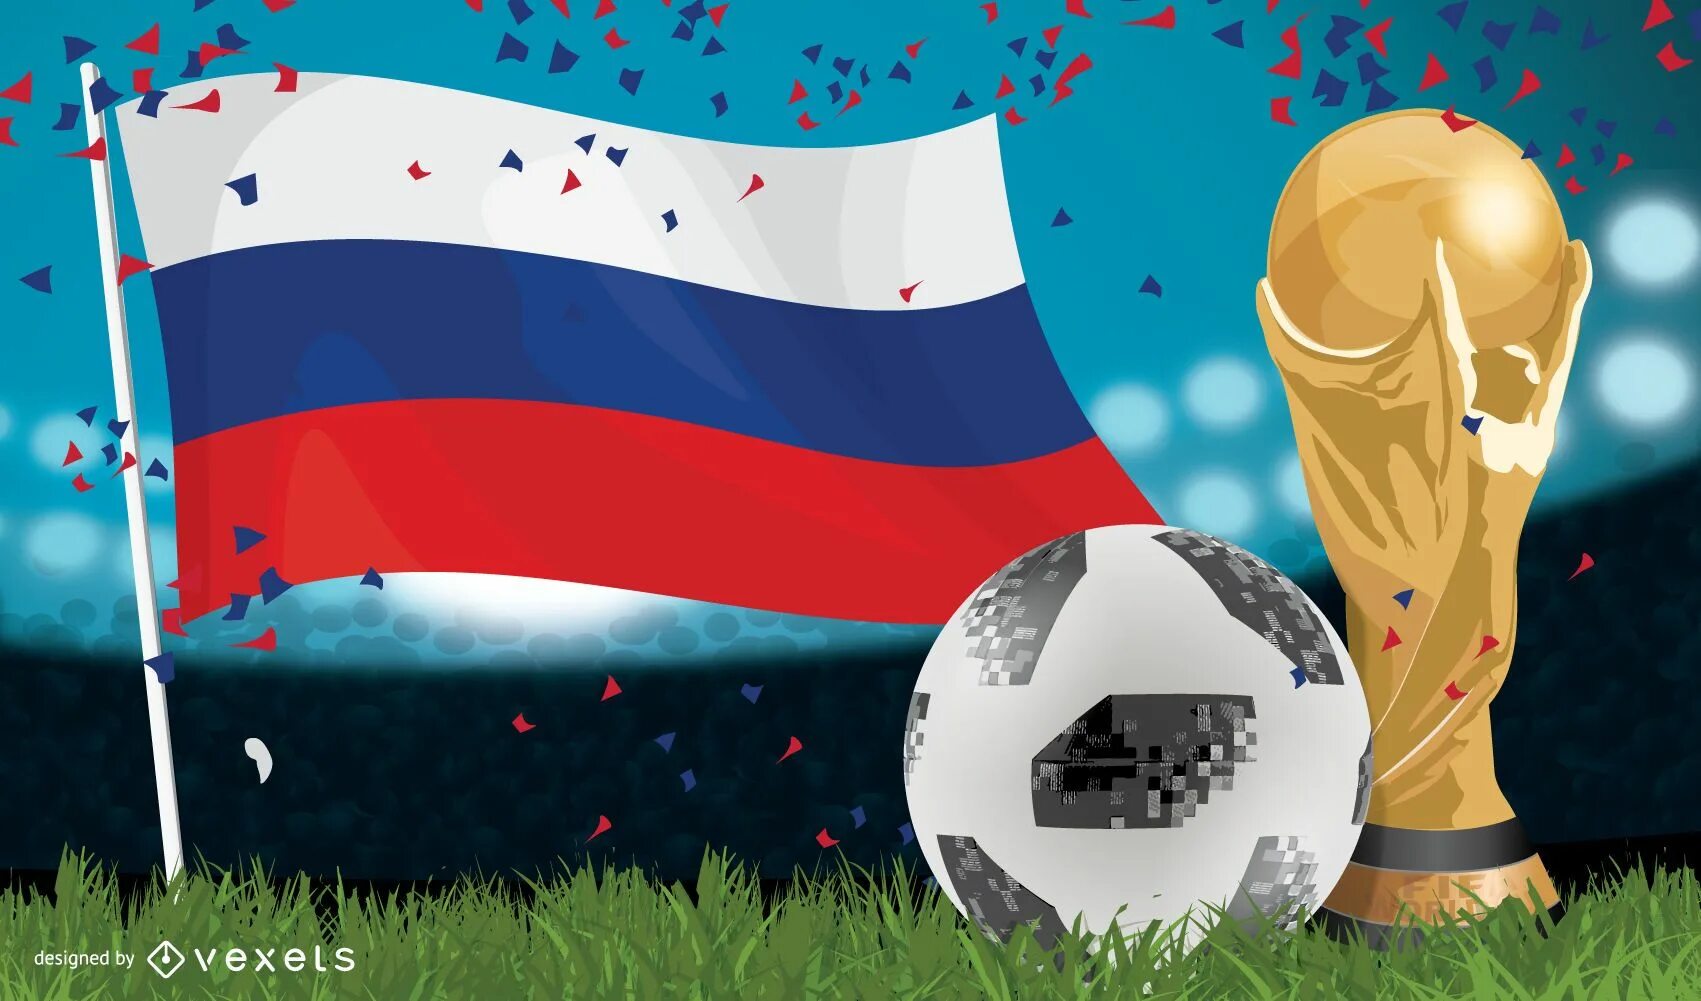 FIFA World Cup 2018 Russia Flag. Флаг России ФИФА. World Cup 2018 Design. ФИФА флаг России и Европы.